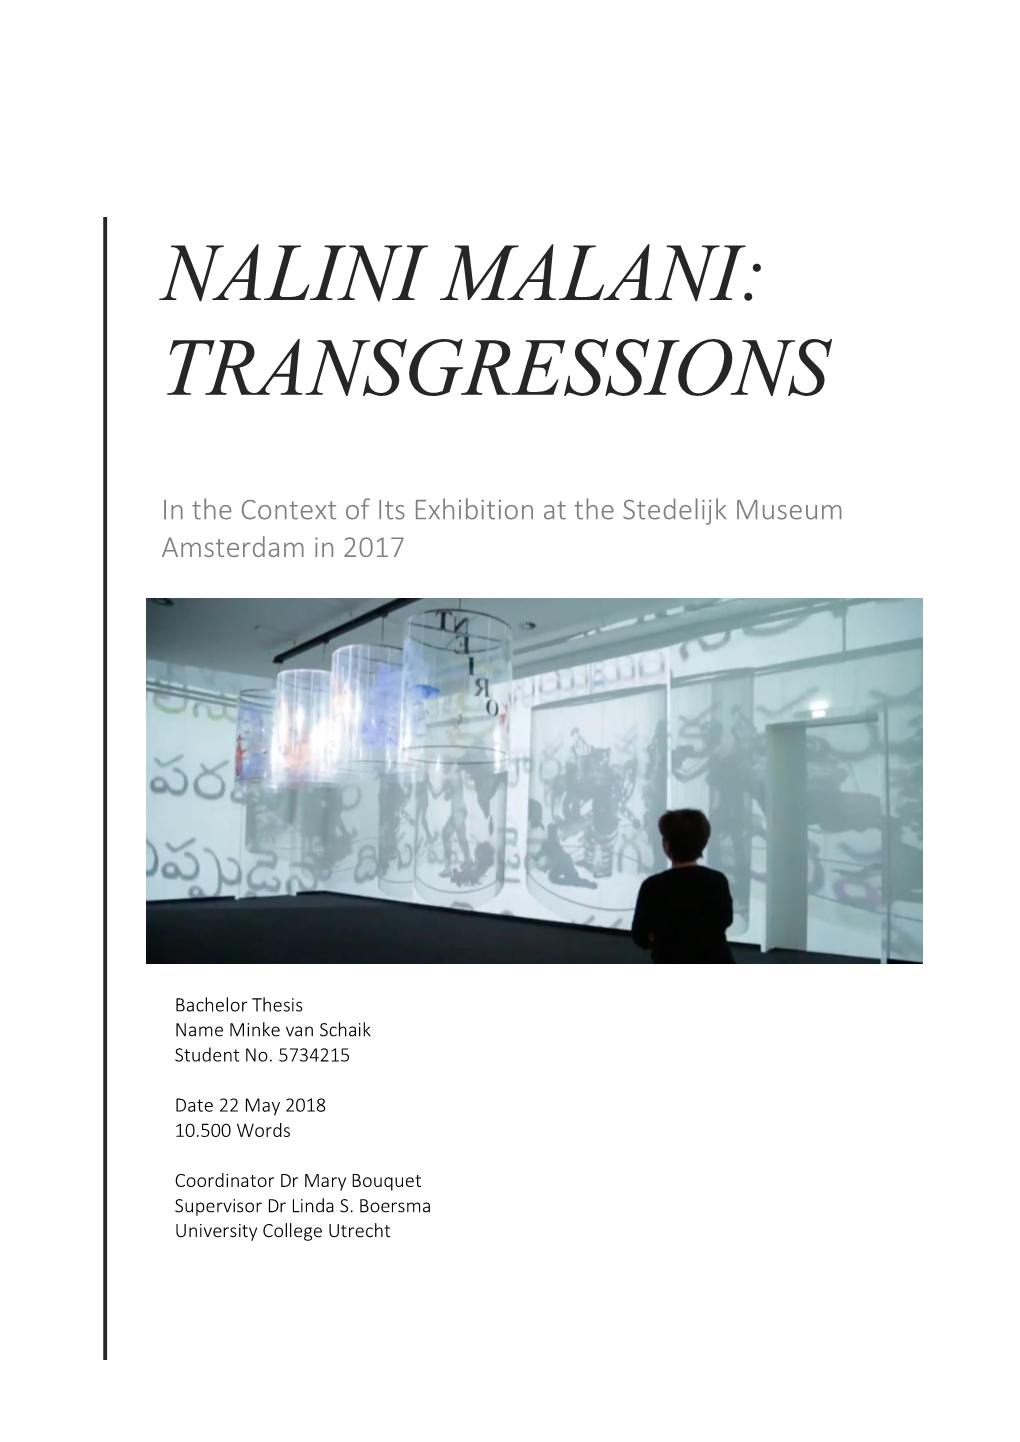 Nalini Malani: Transgressions